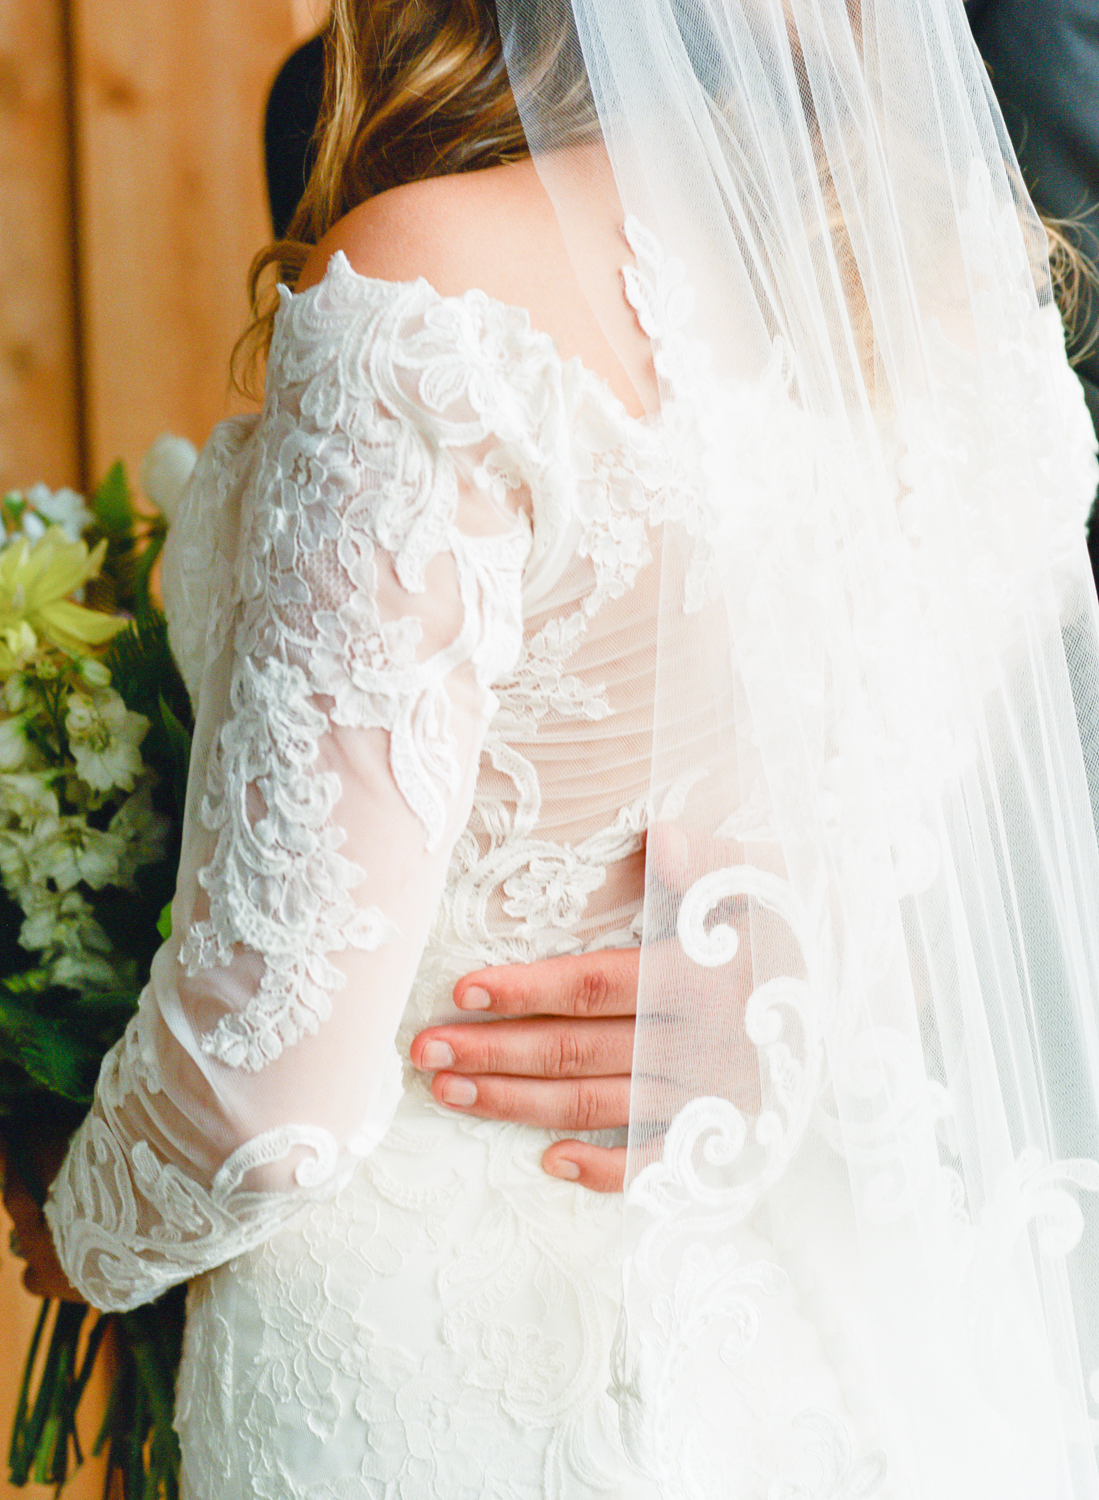 Lace Mimi's bridal gown, St. Louis fine art film wedding photographer Erica Robnett Photography